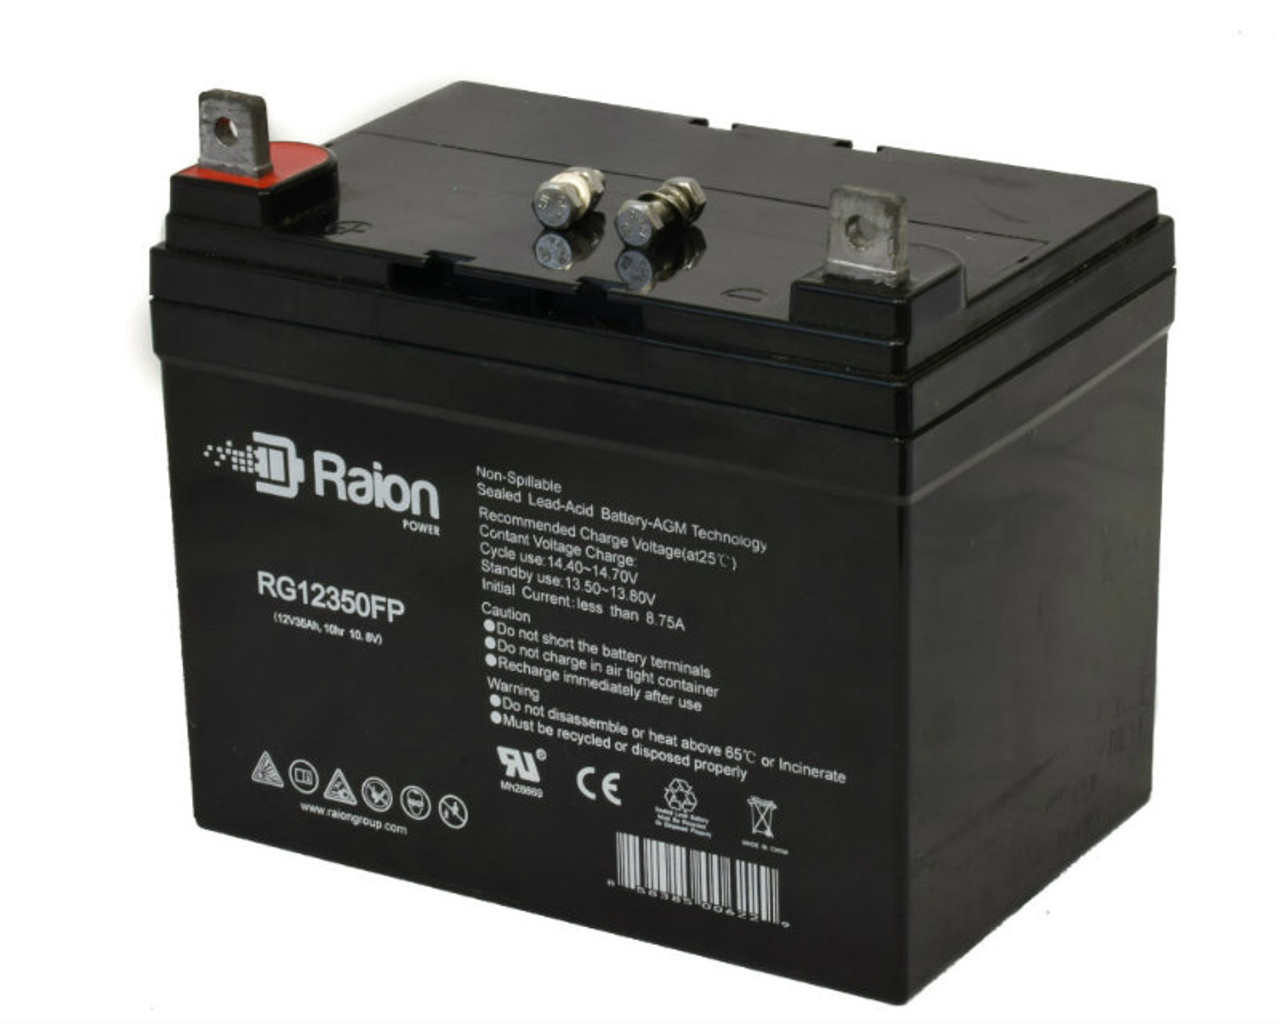 Raion Power Replacement 12V 35Ah RG12350FP Battery for John Deere 68